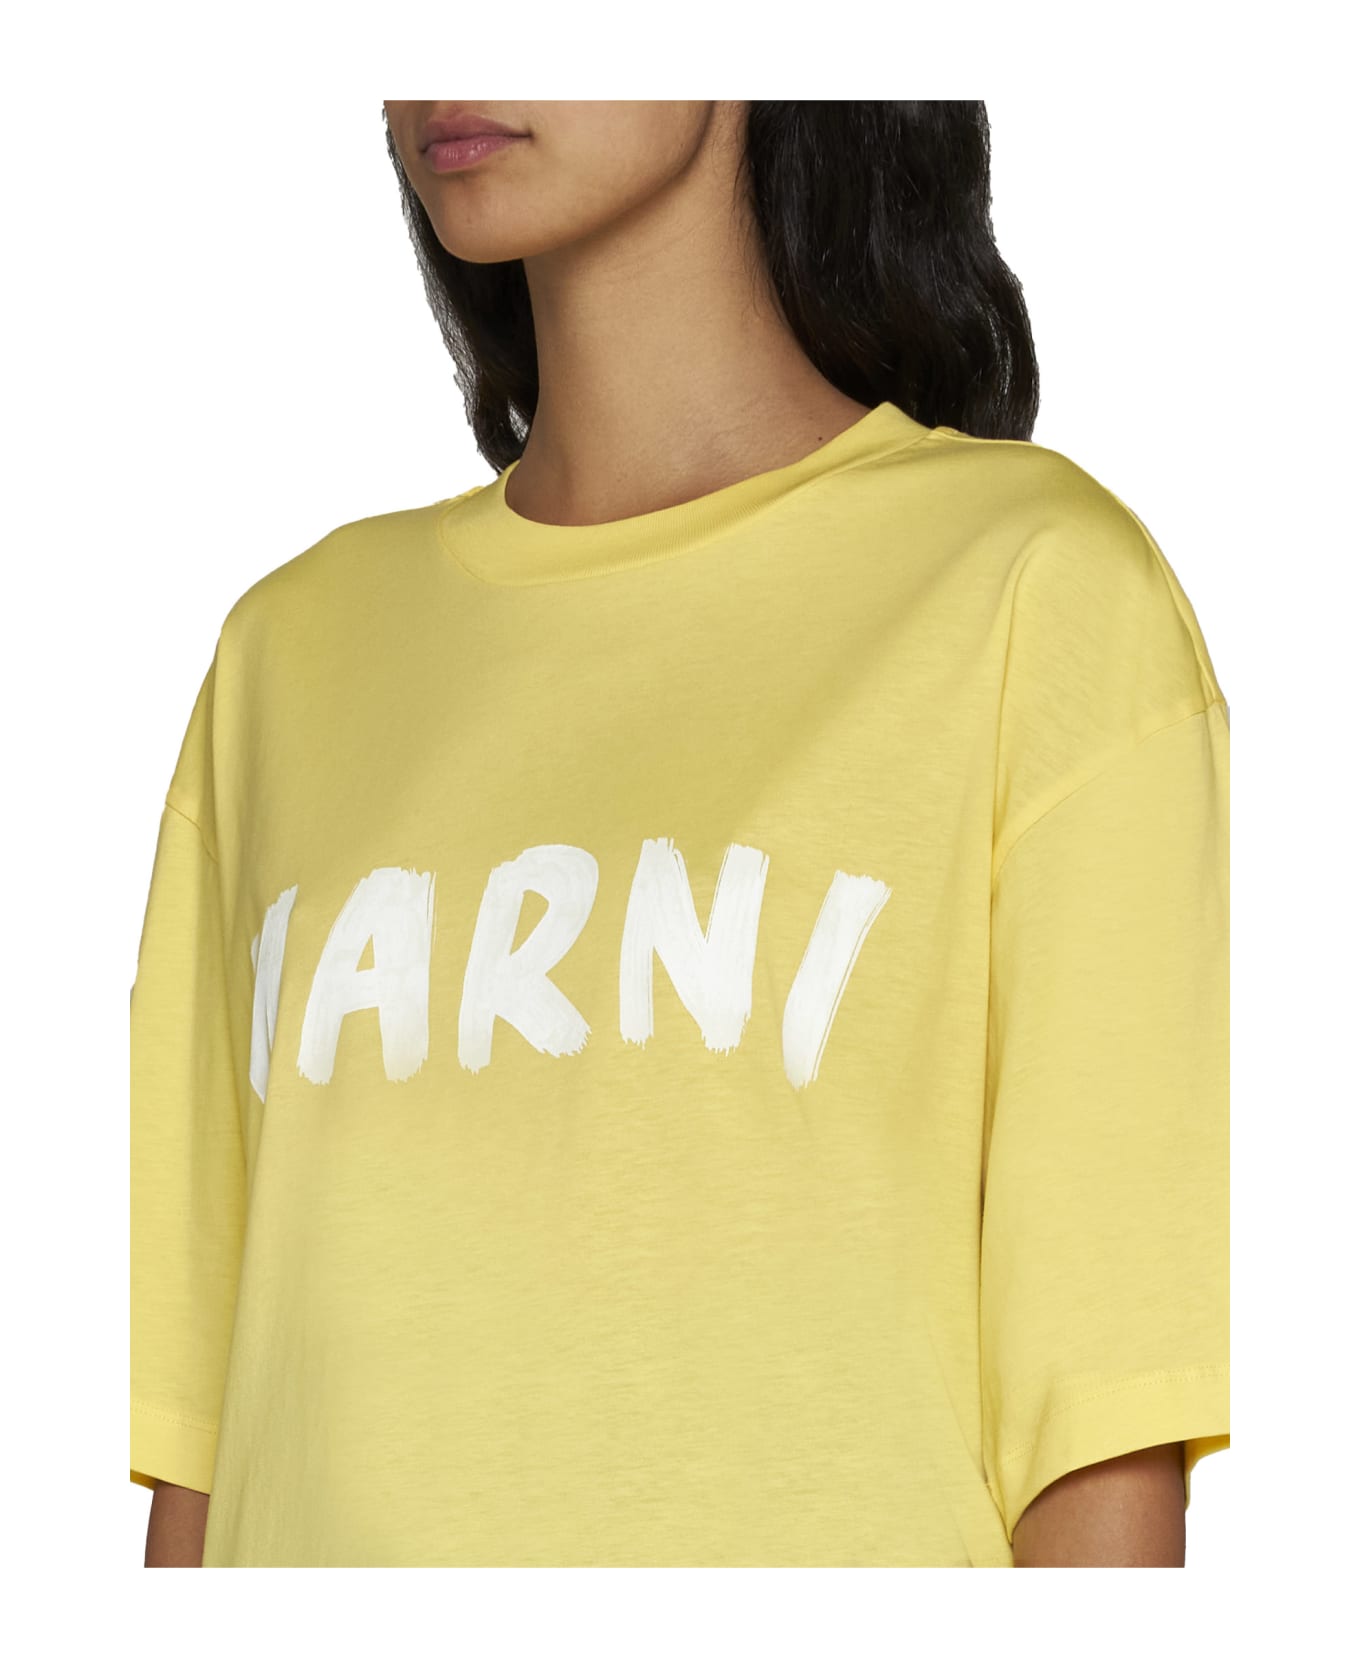 Marni T-Shirt - Lemmon